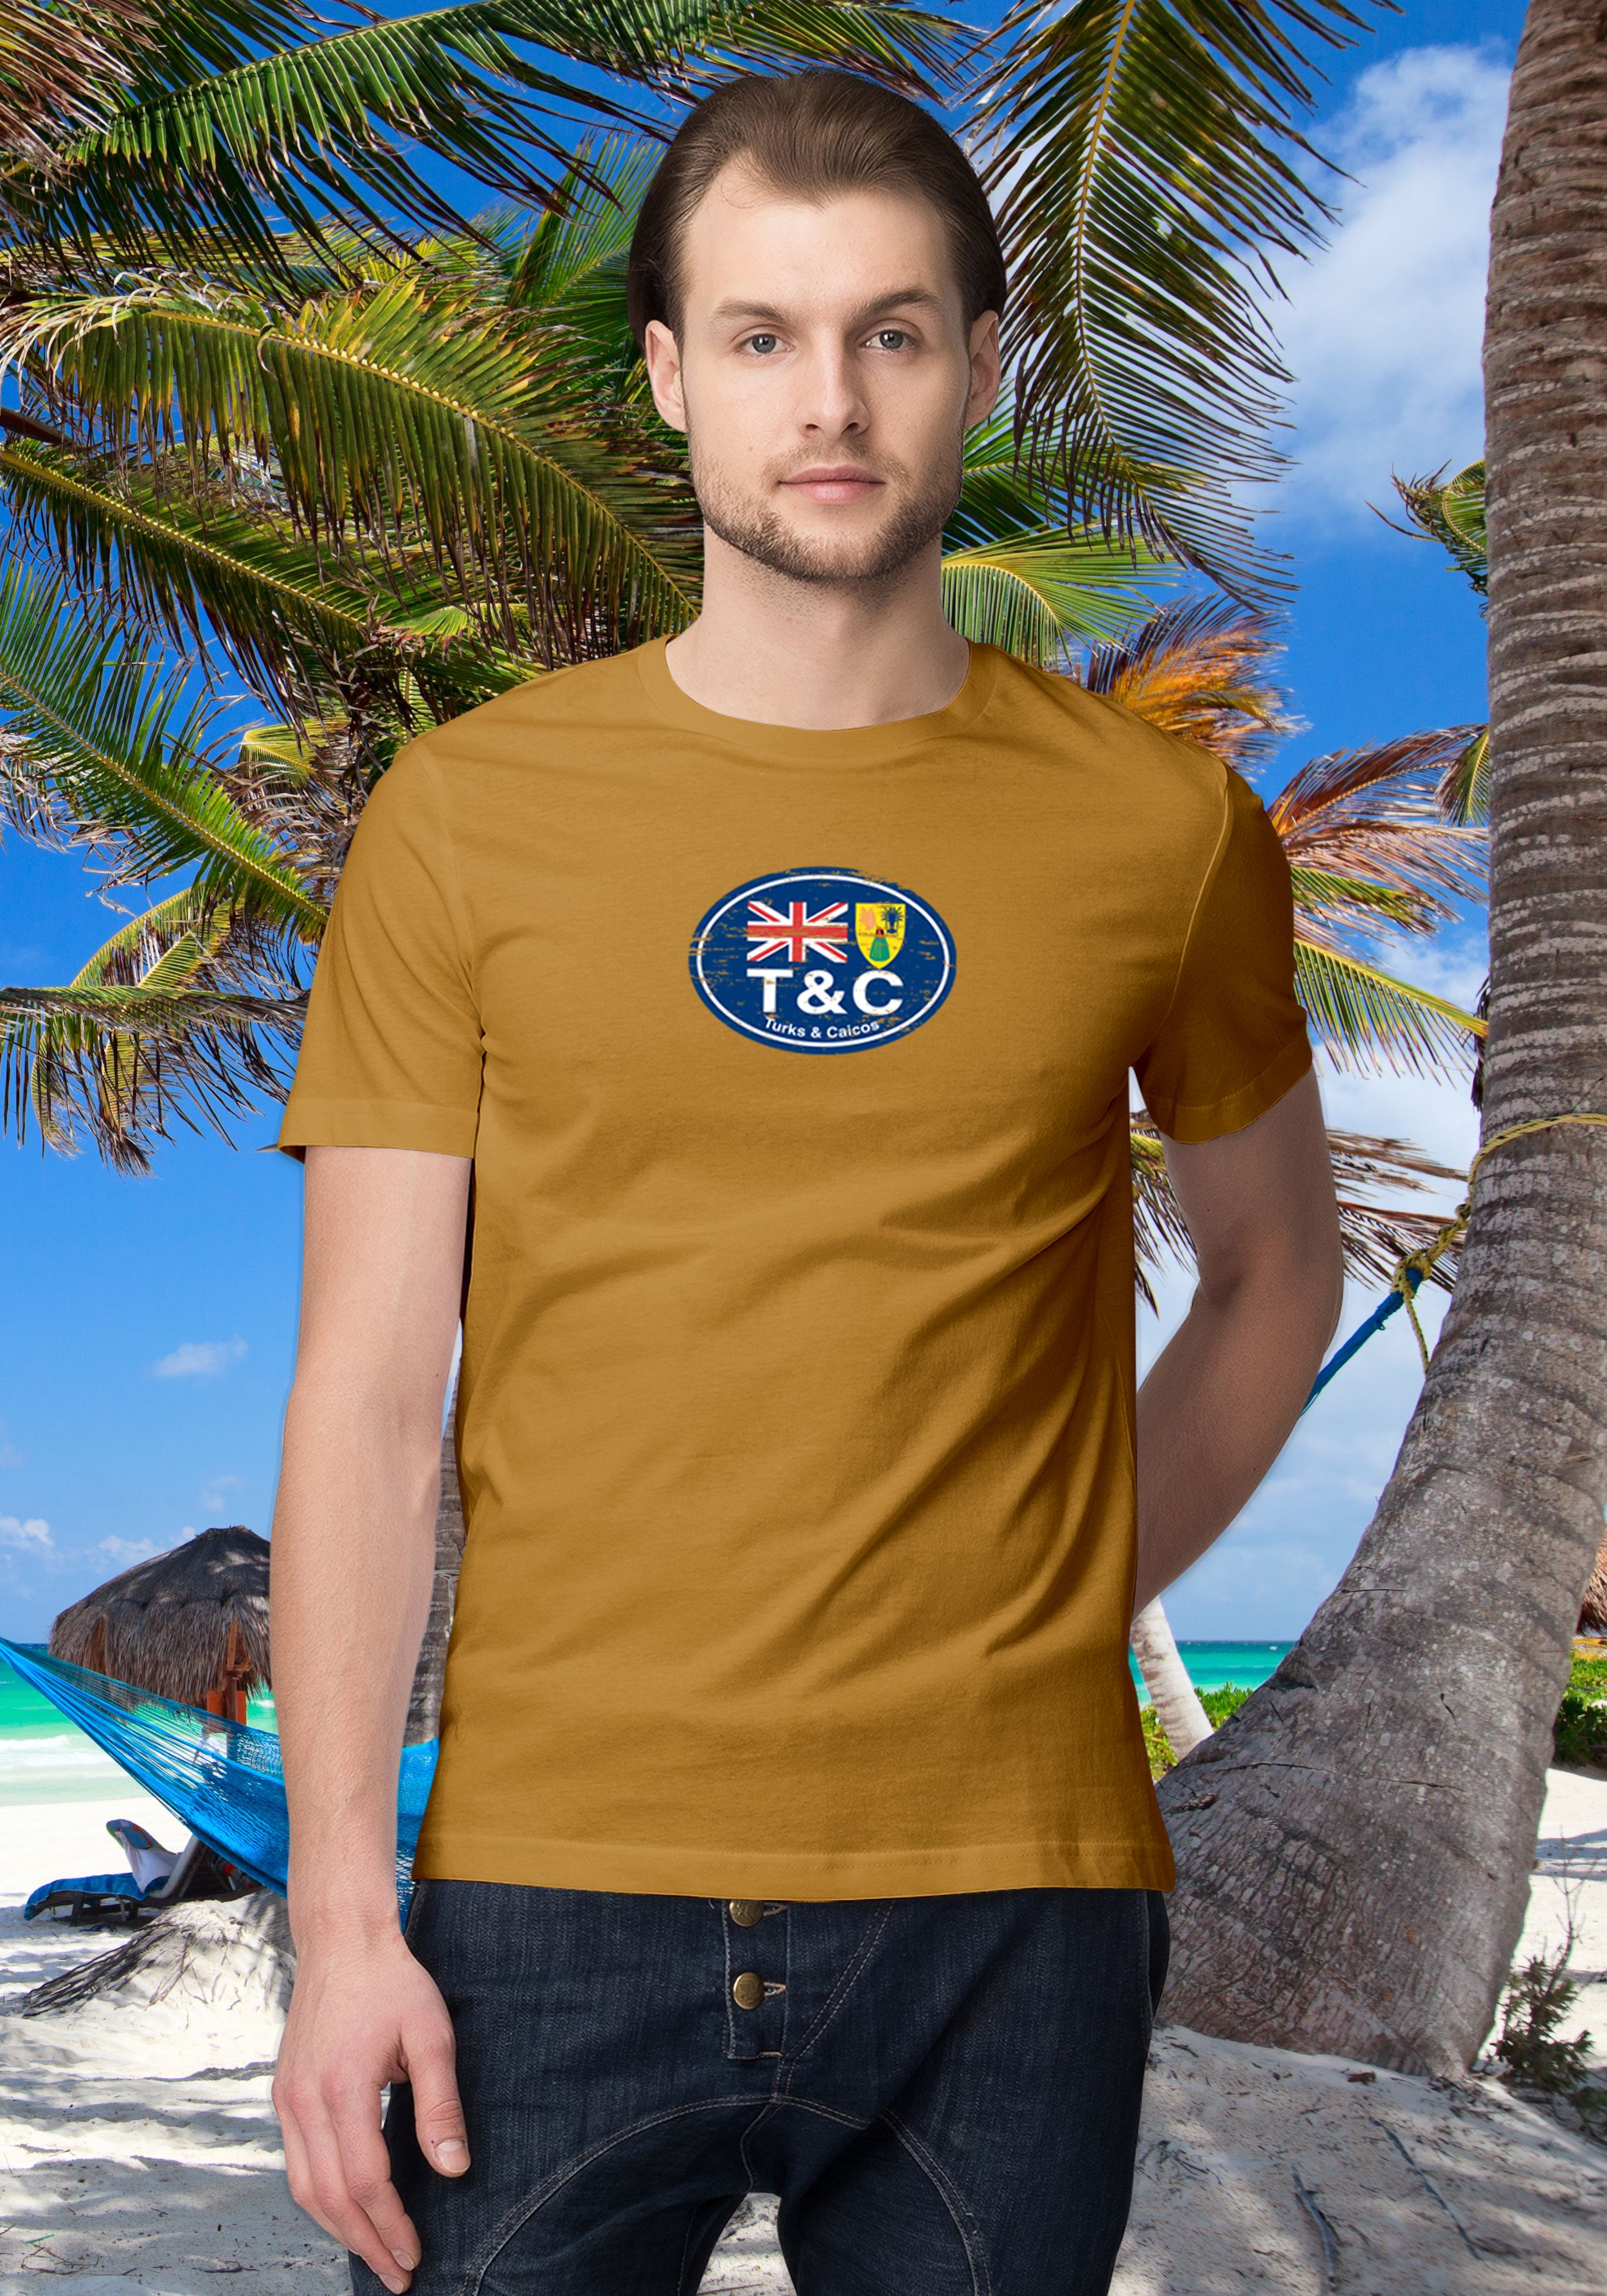 Turks & Caicos Men's Flag T-Shirt Souvenirs - My Destination Location